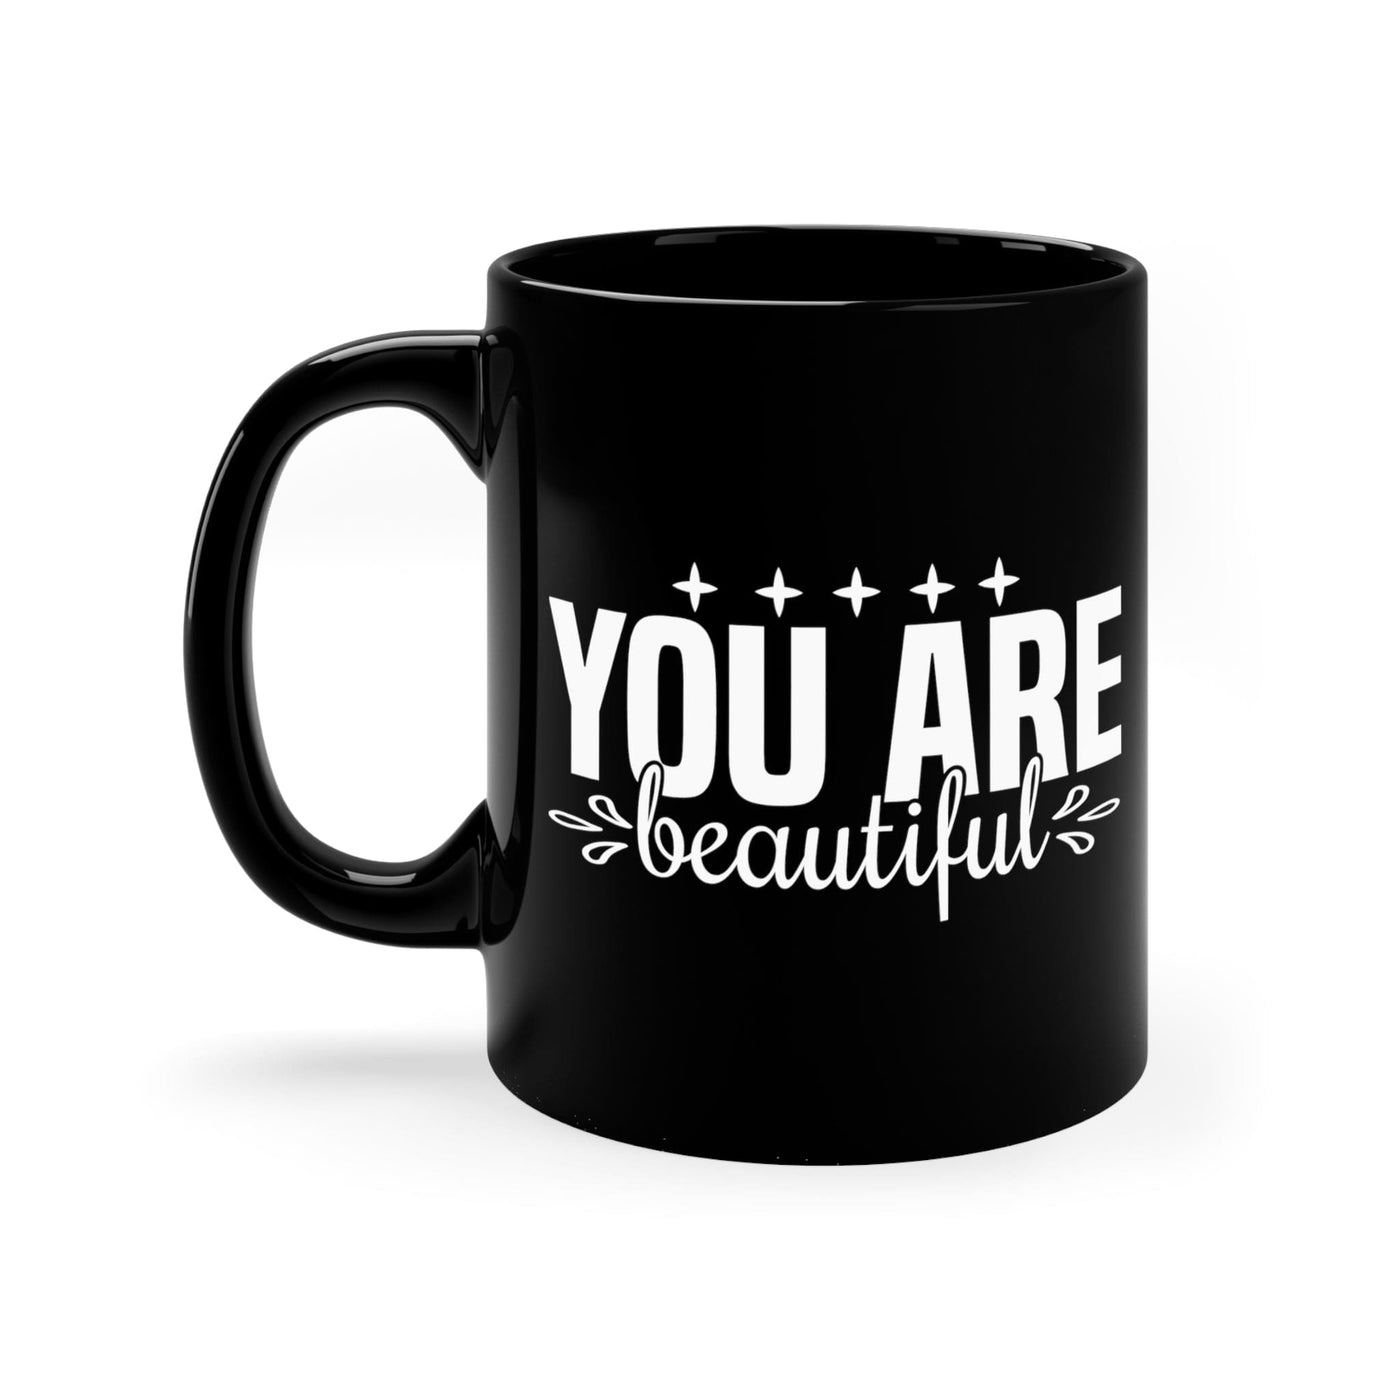 Black Ceramic Mug - 11oz You Are Beautiful Inspiration Affirmation Decorative